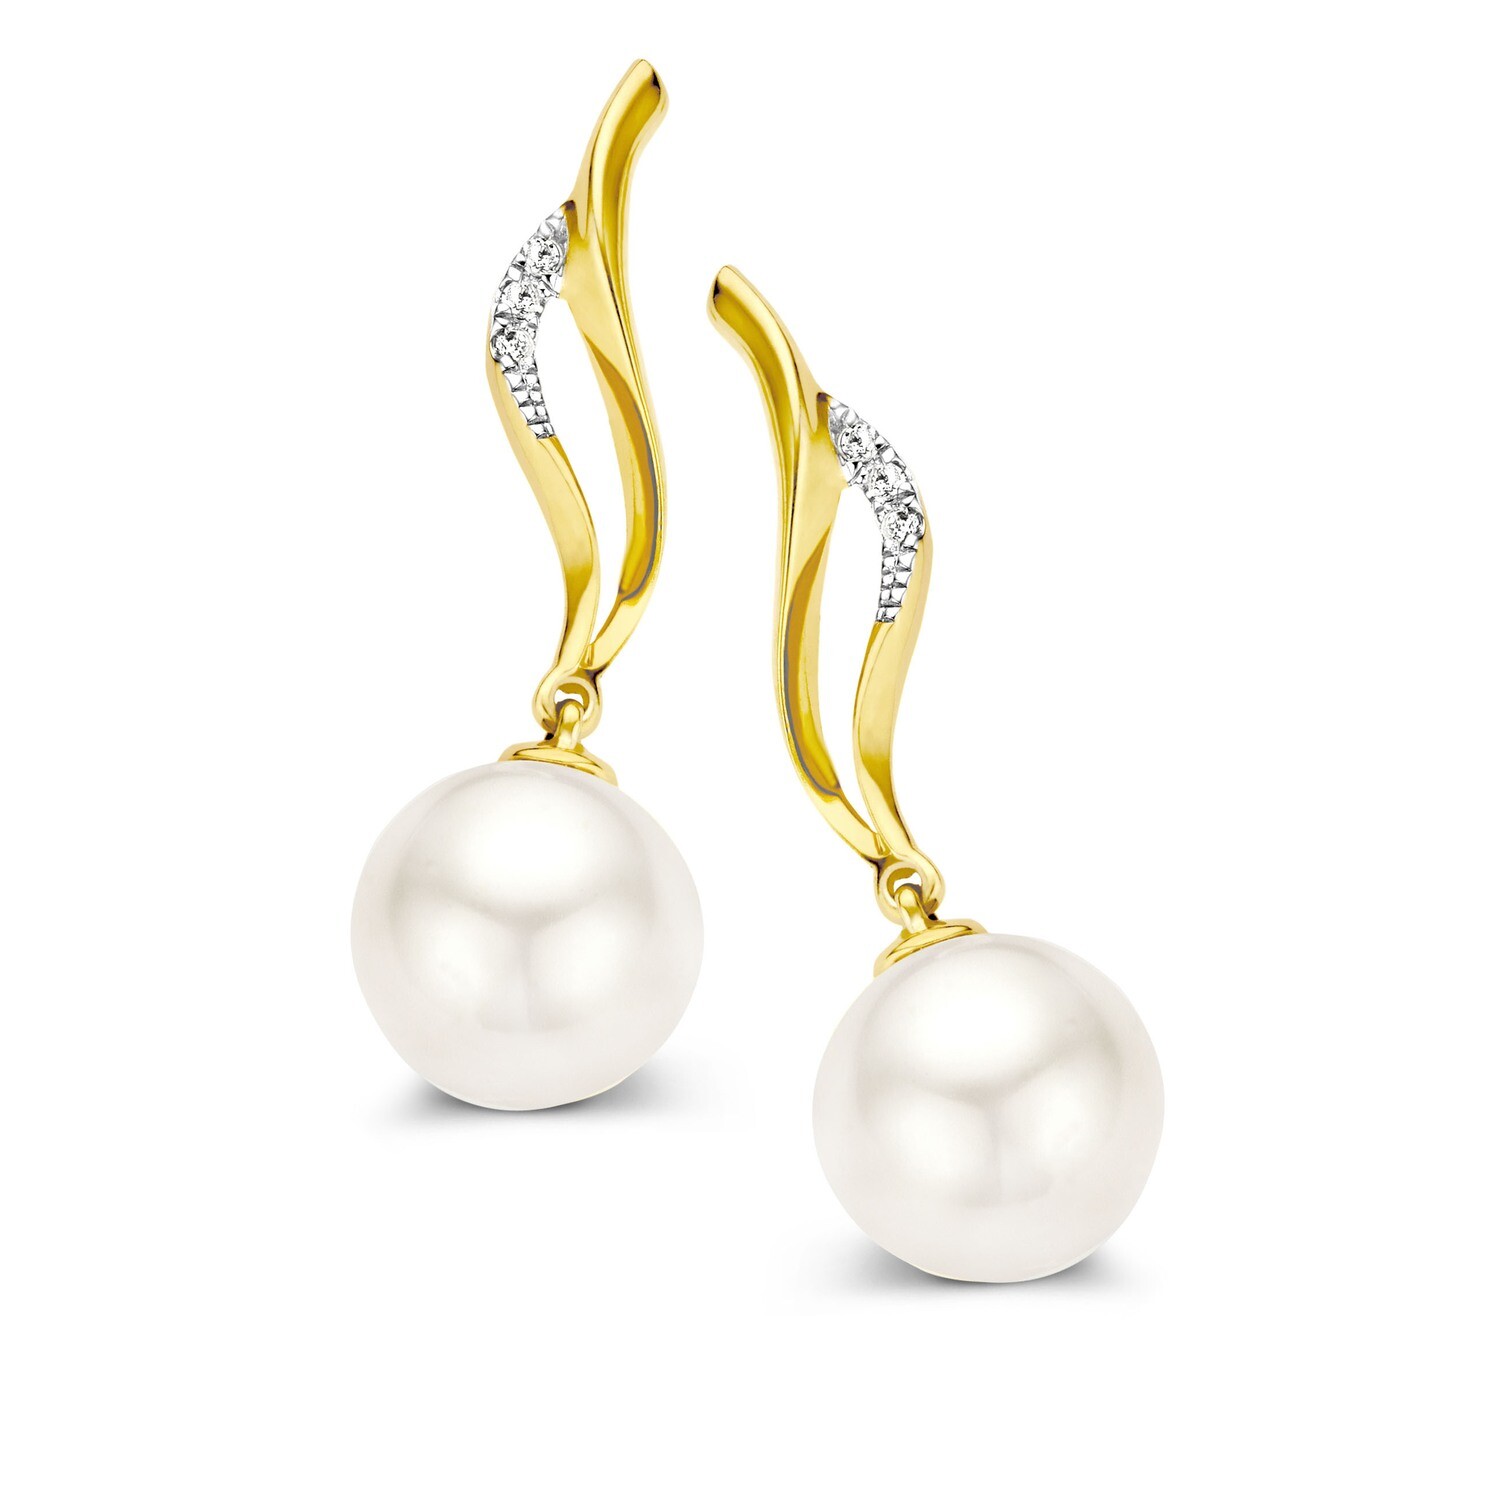 Boucles d'oreilles or 18 carats + diamants + perles